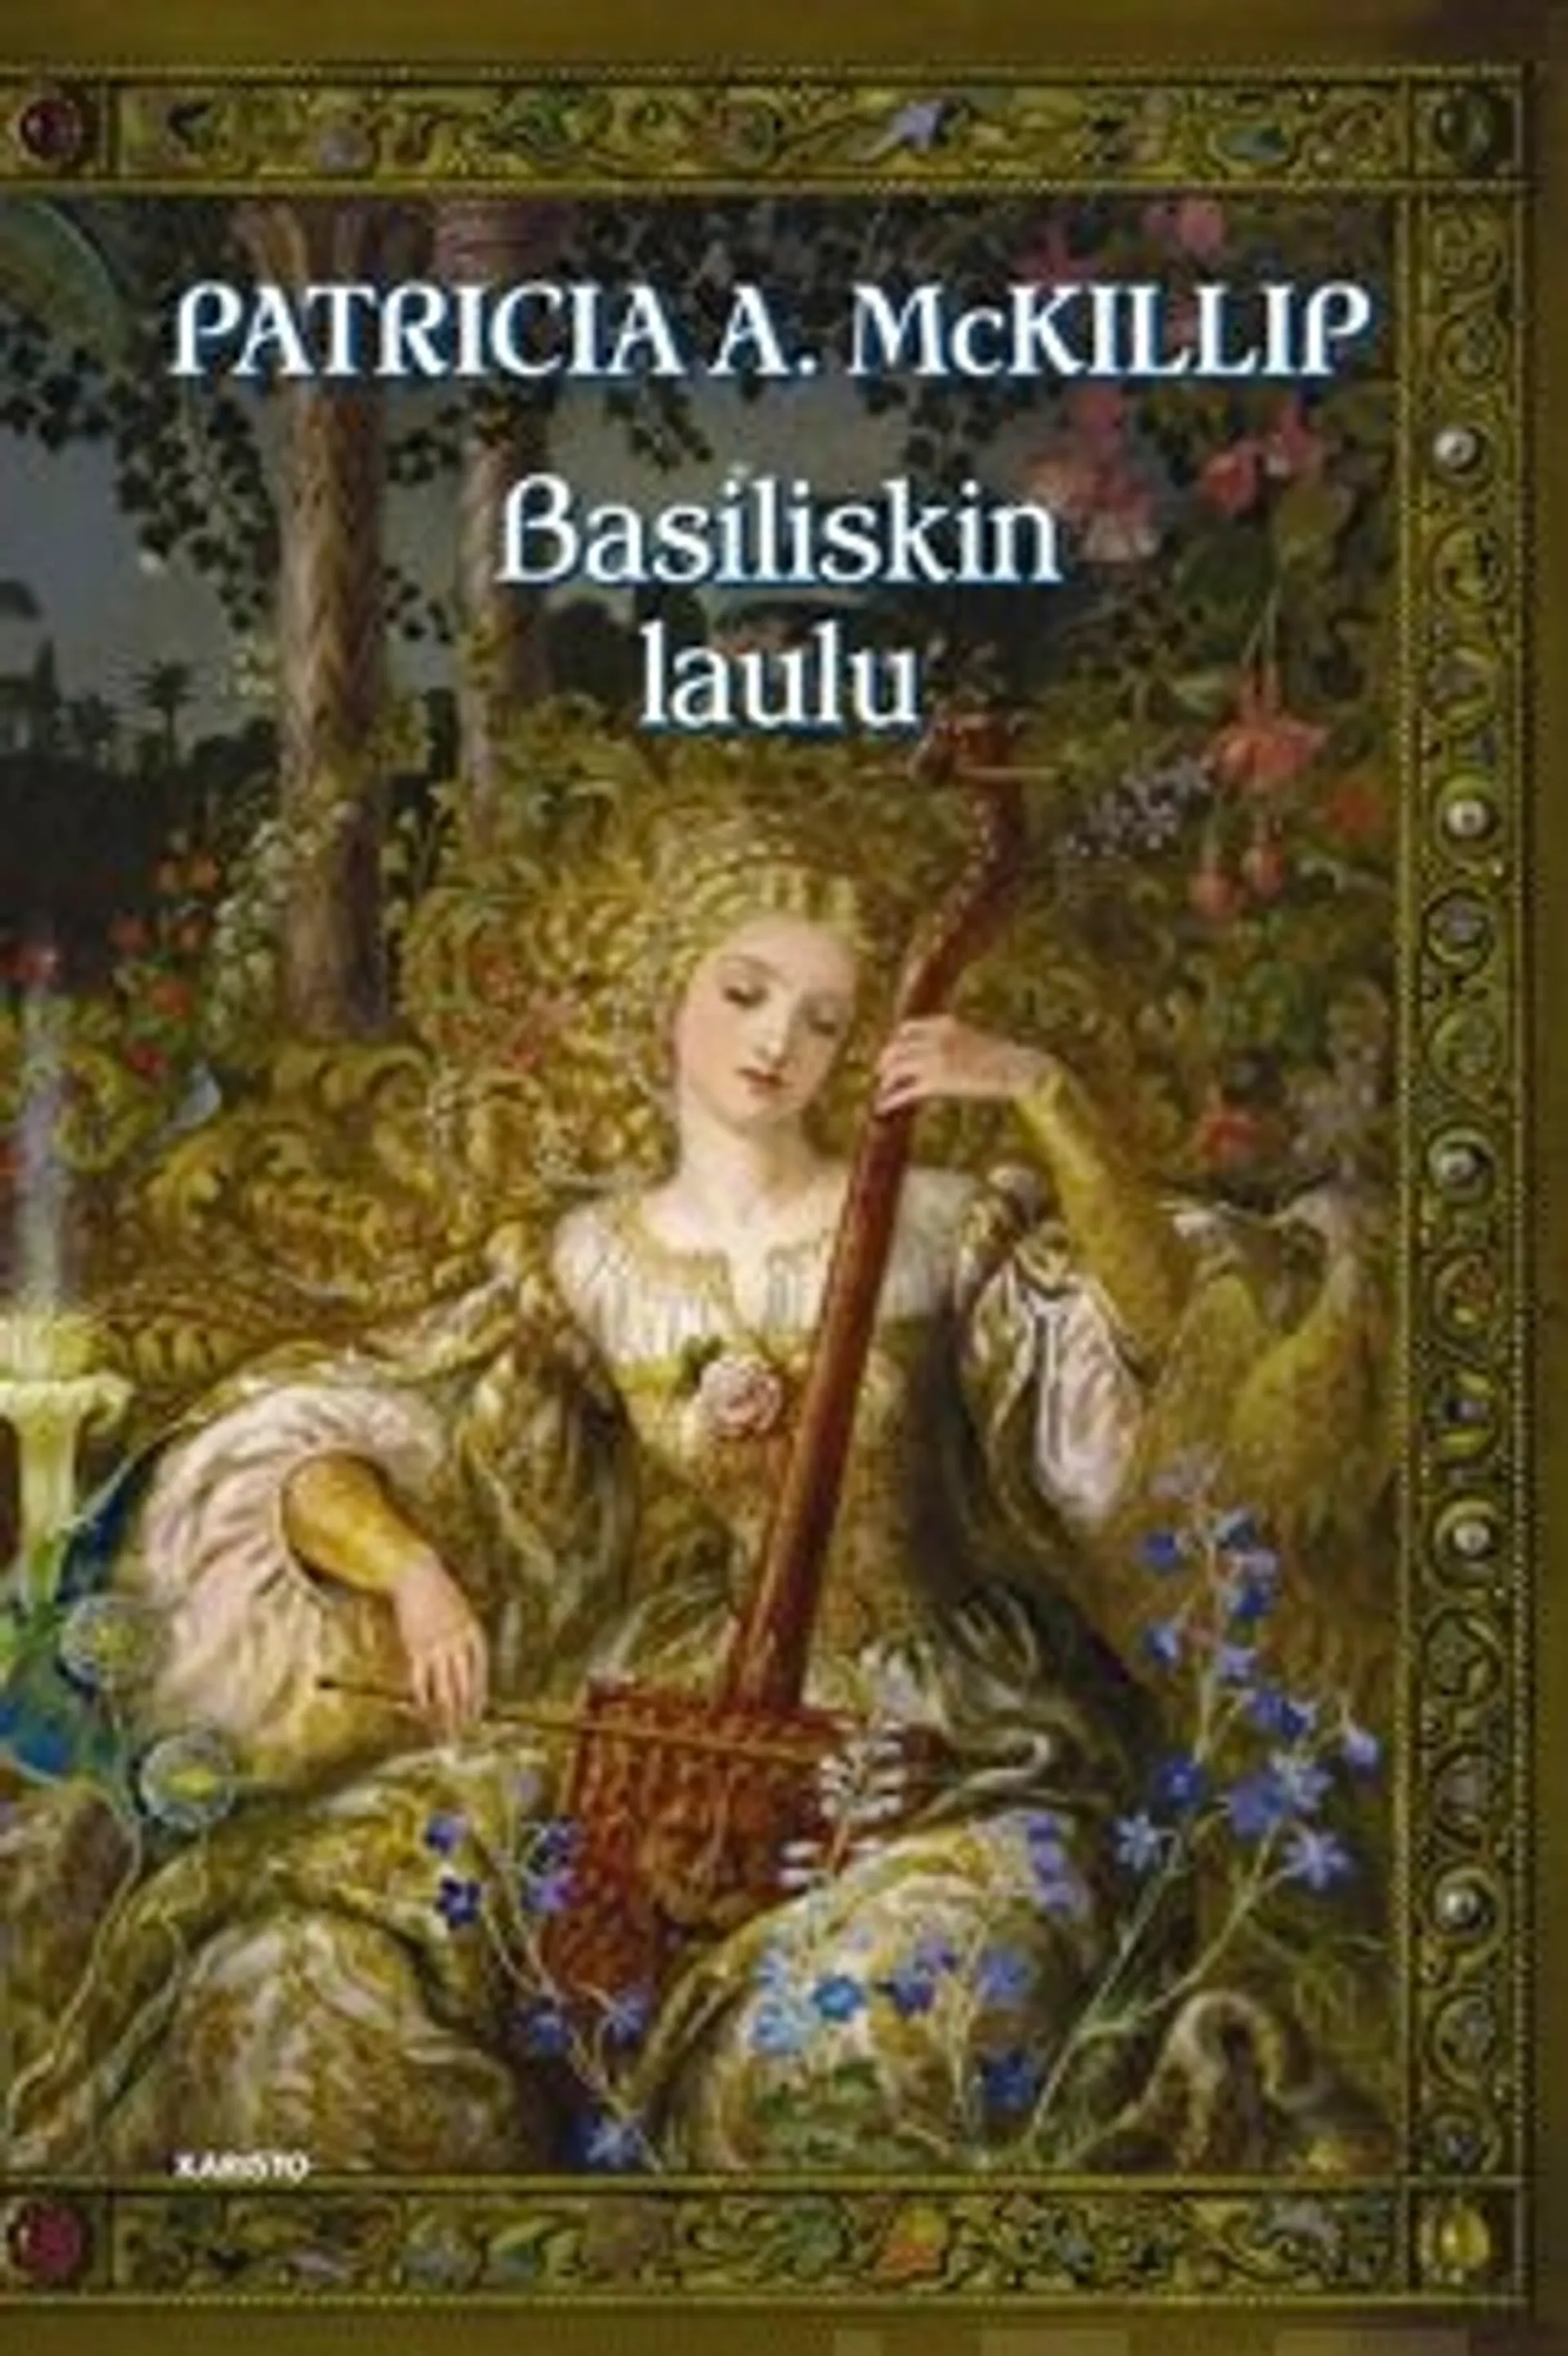 McKillip, Basiliskin laulu